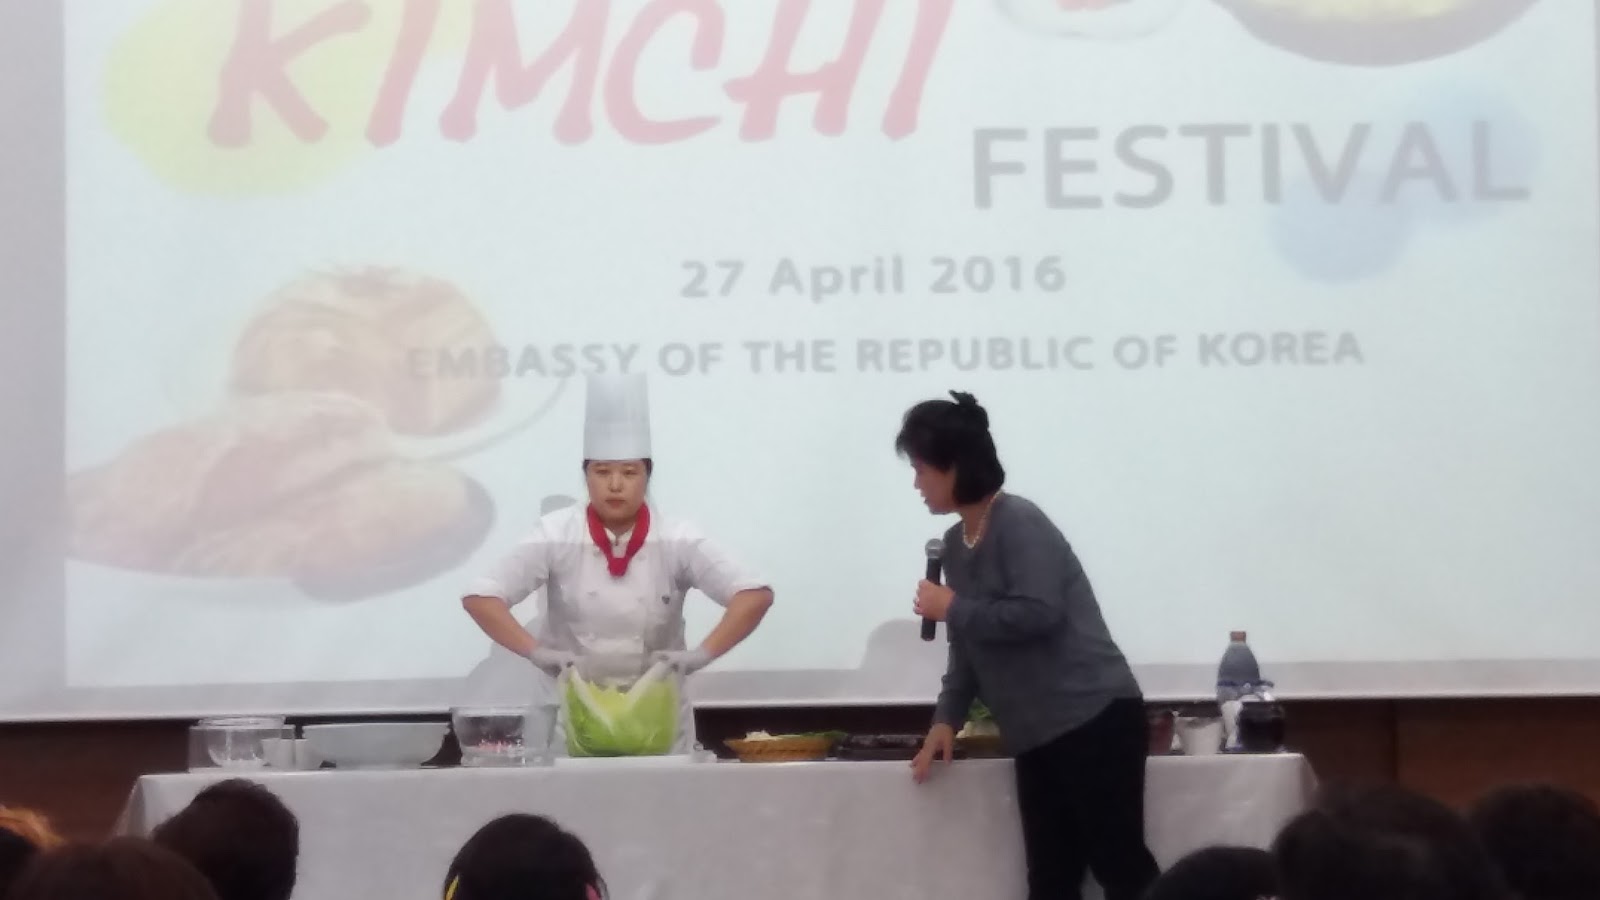 [NEWS] Festival Kimchi 2016, Buat Kimchi Bersama Sang Ahli 